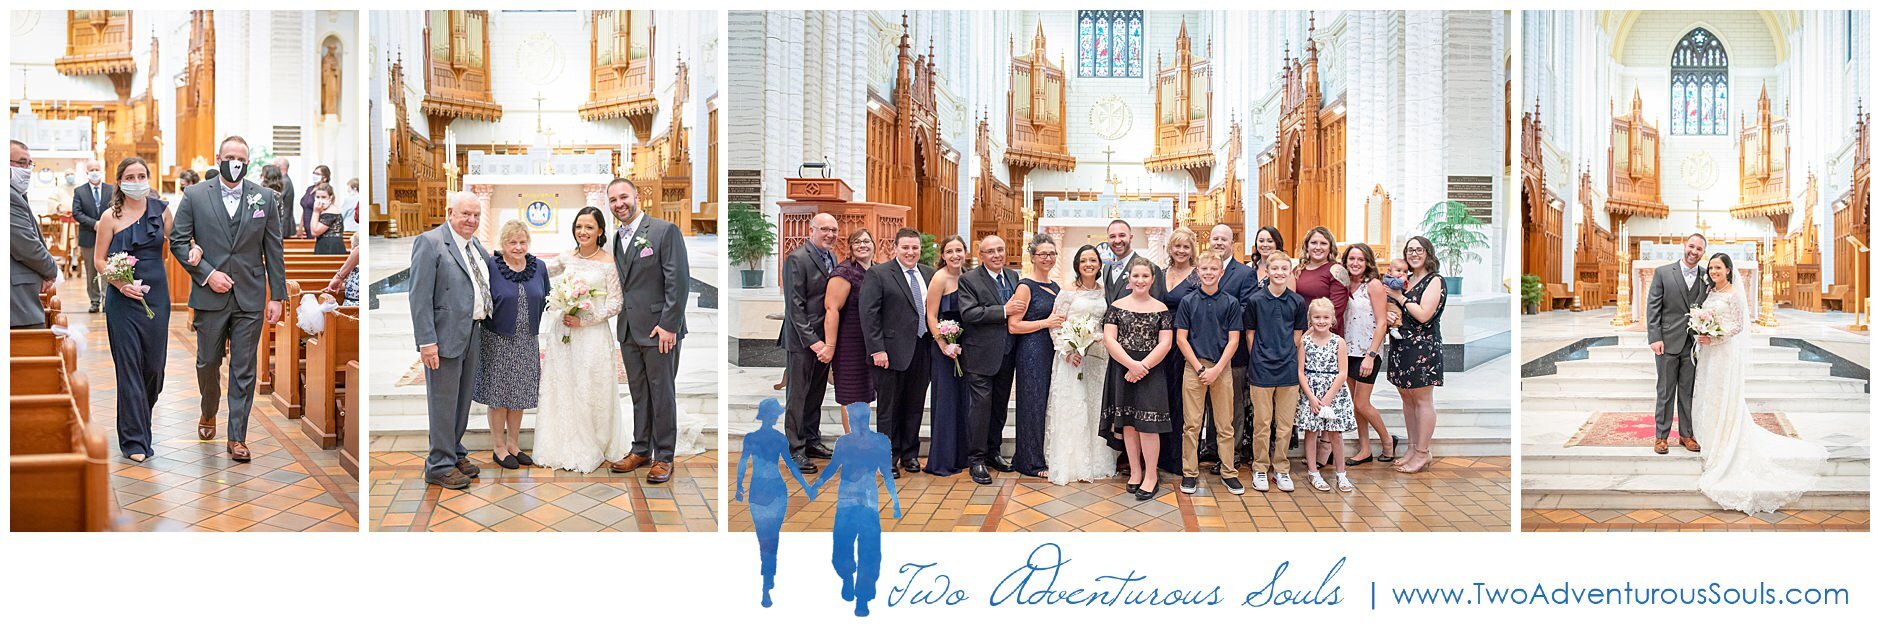 Lewiston Maine Wedding, Maine Wedding Photographers, Two Adventurous Souls - 101020_0025.jpg